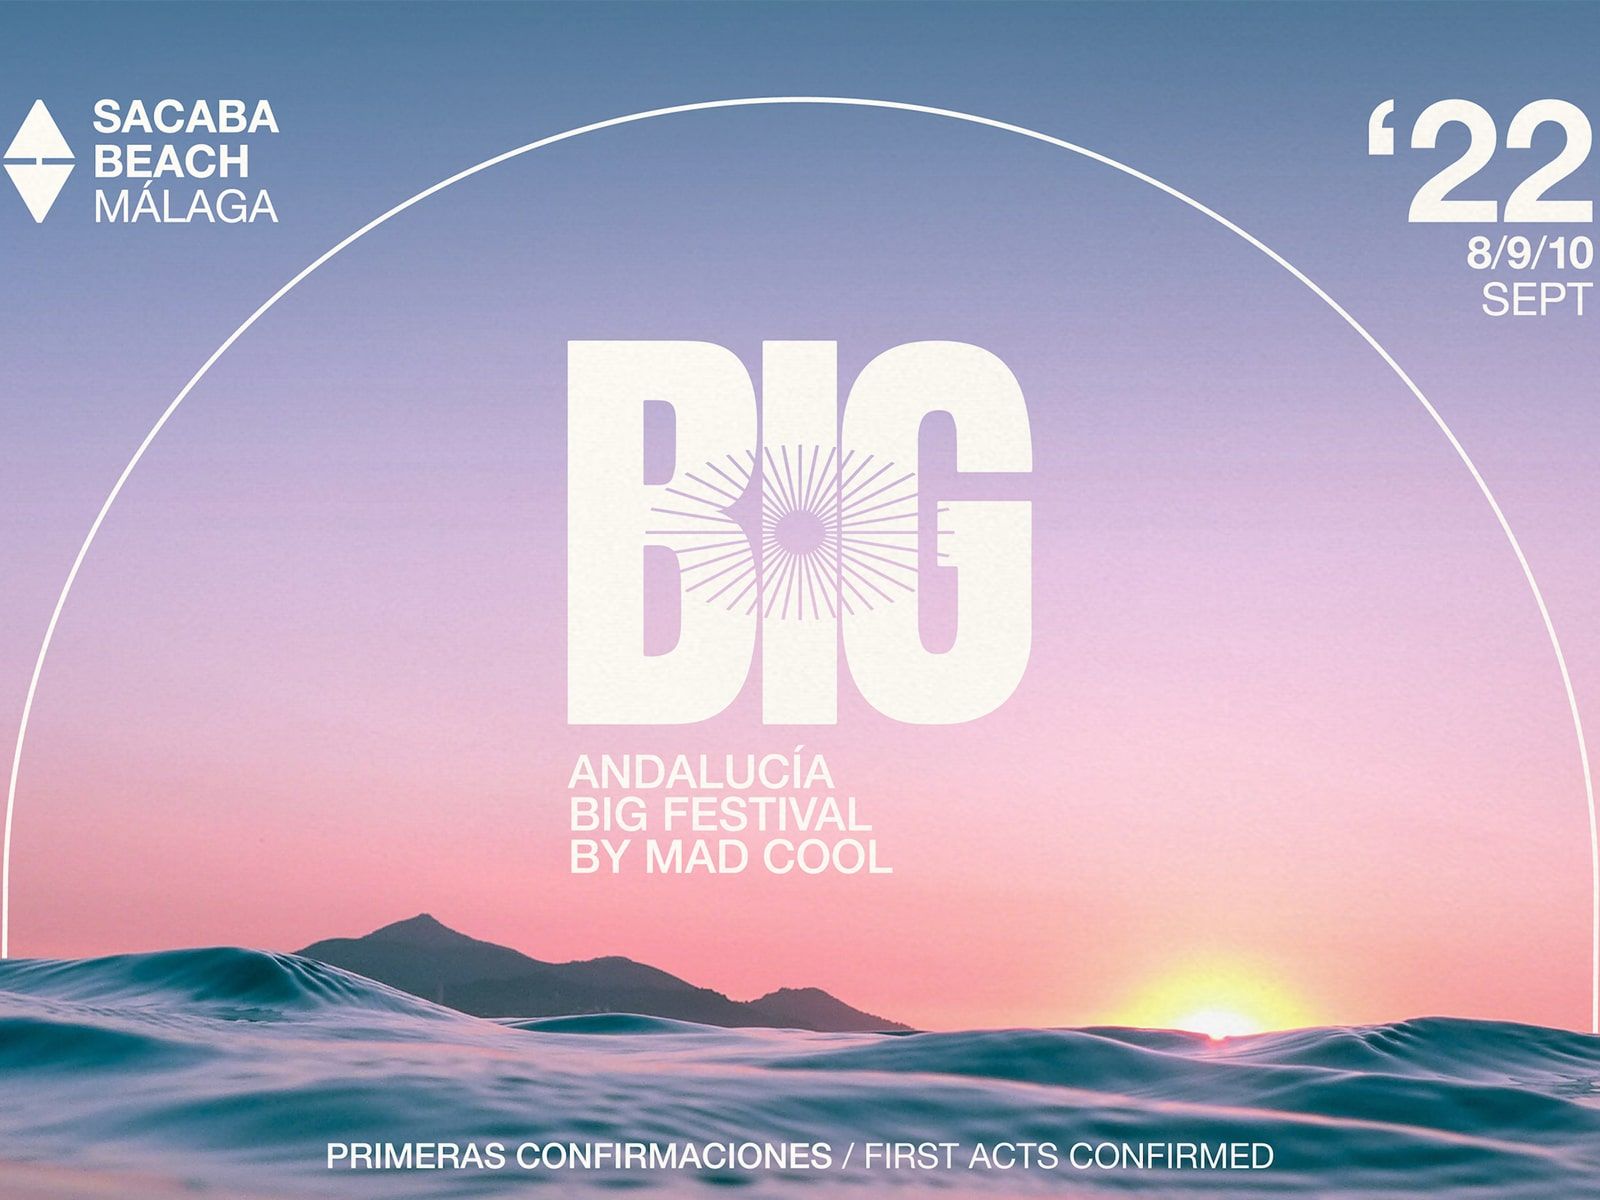 The Junta de Andalucía and Mad Cool Festival present the cultural project Andalucia Big